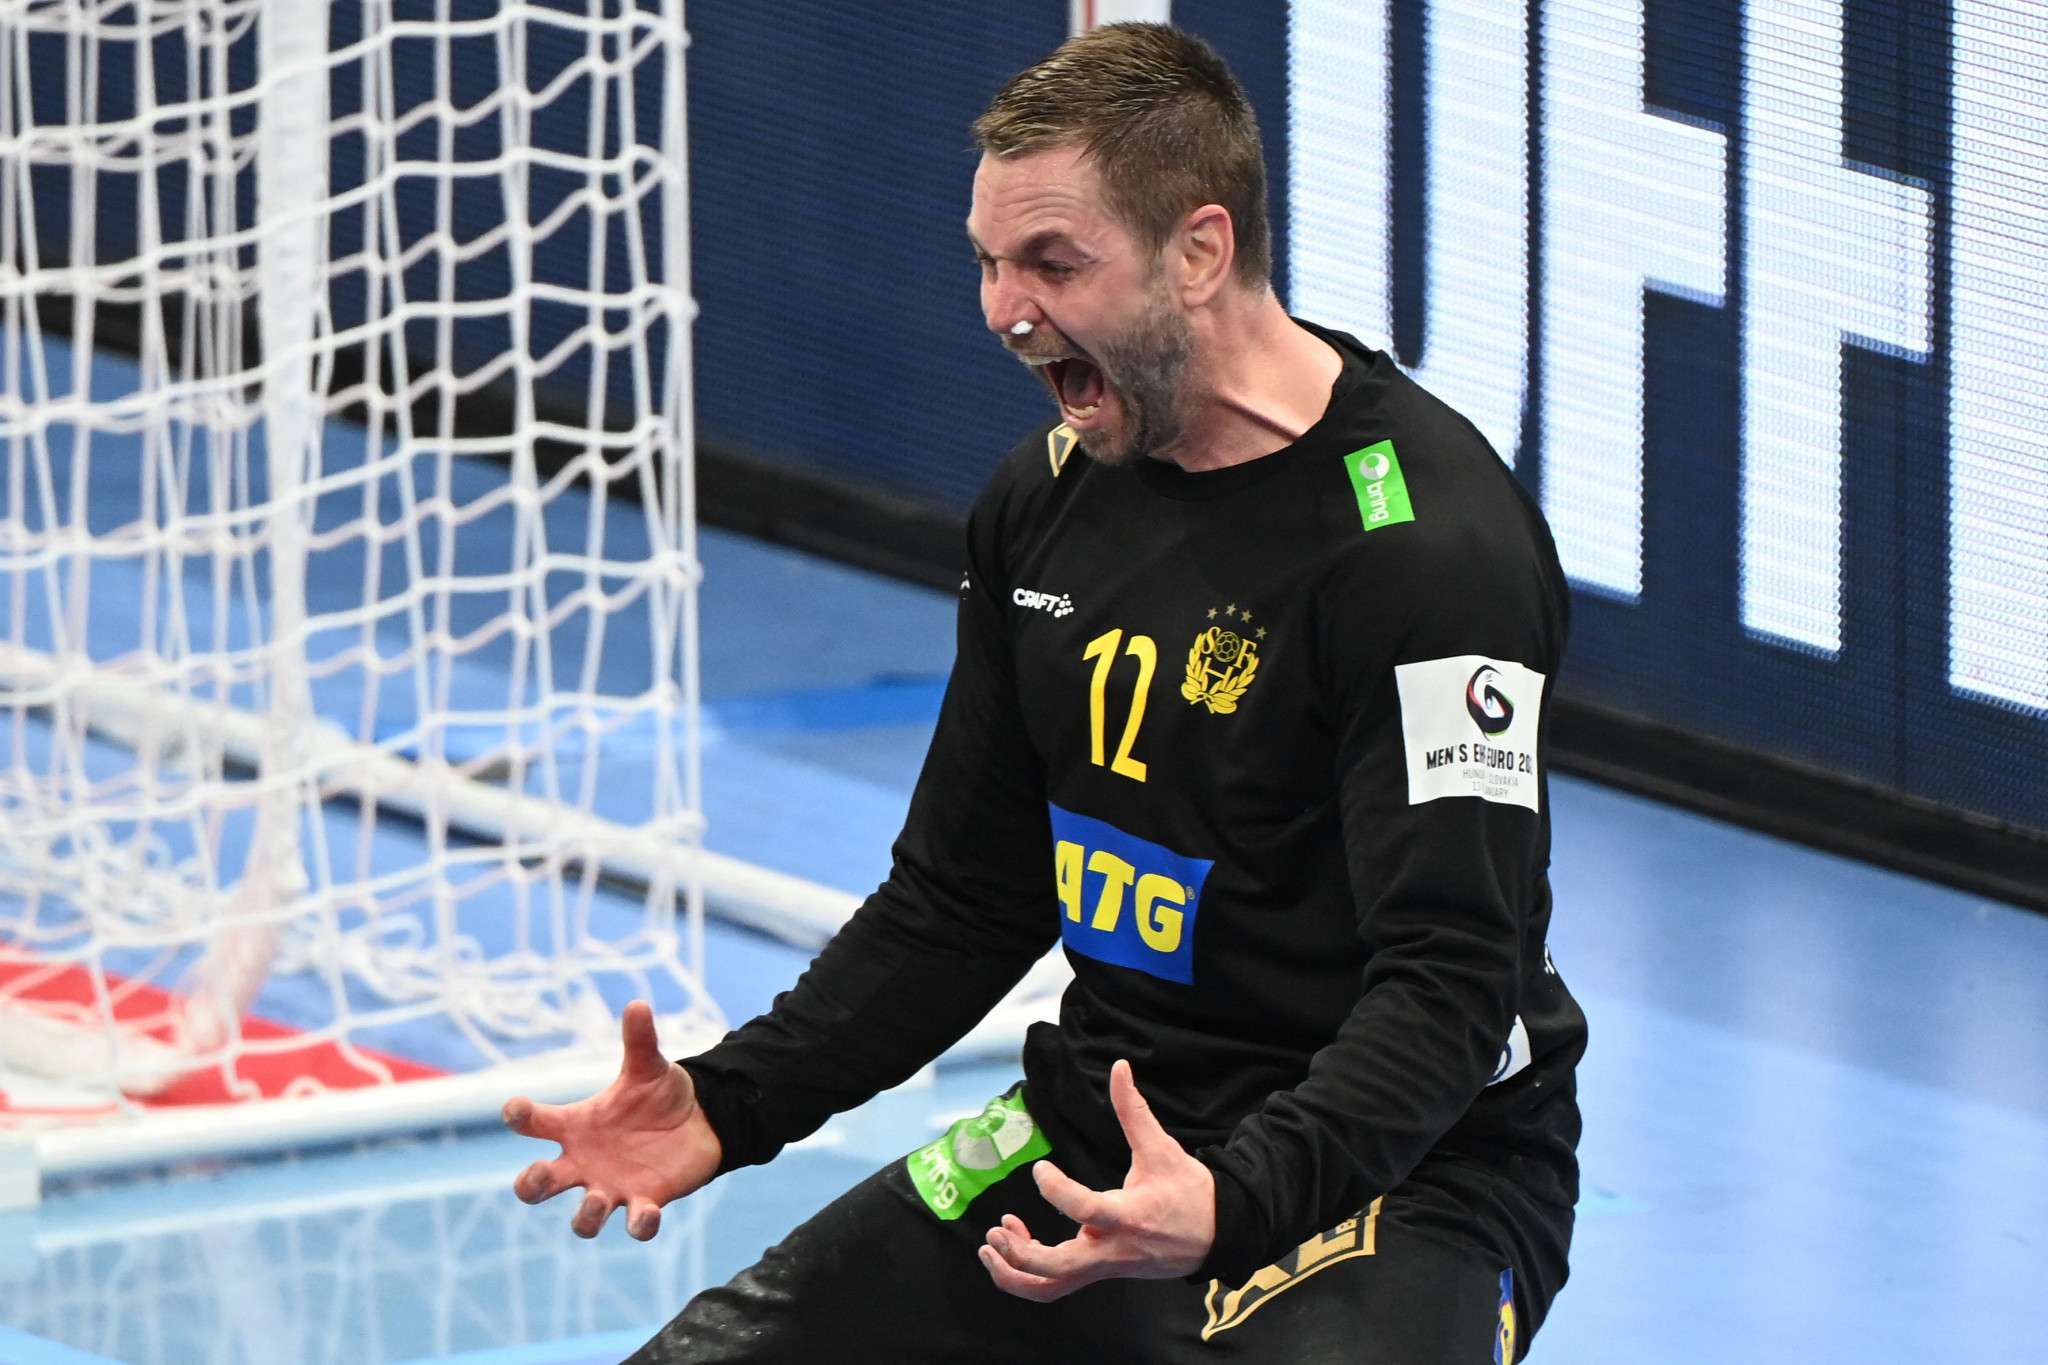 Sweden eliminate Olympic champions to set up final versus European handball kings Spain